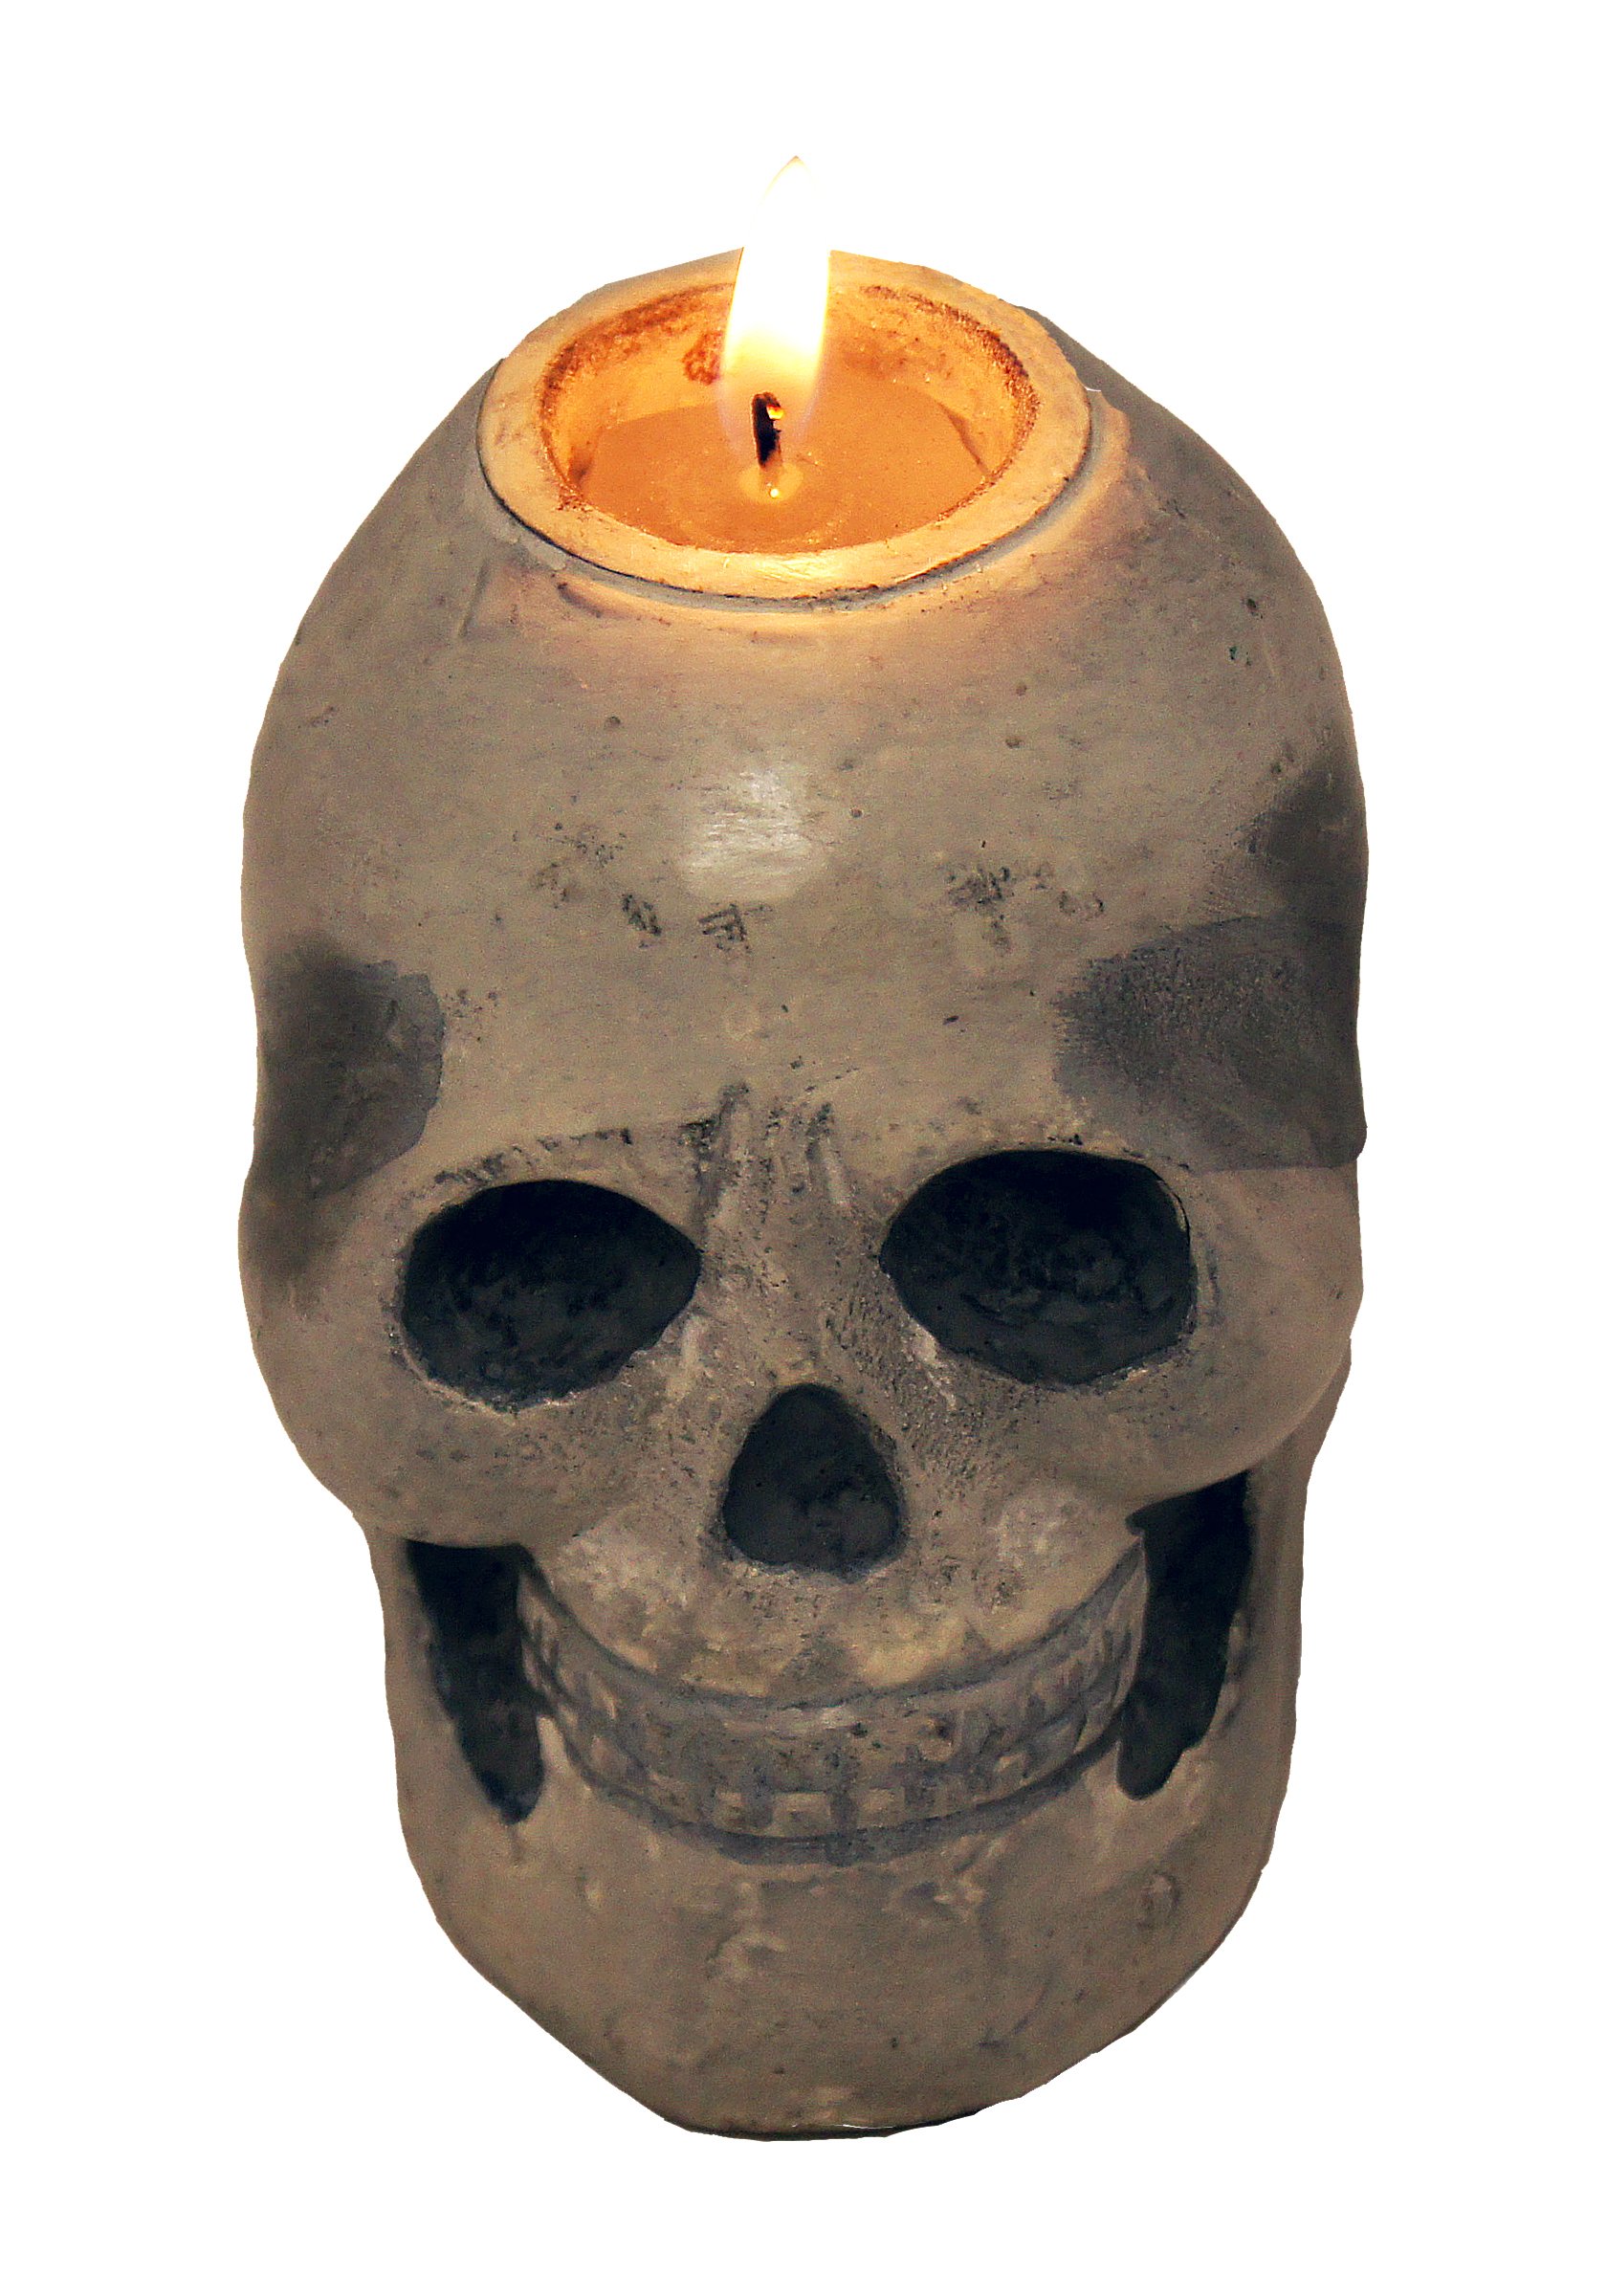 GiftBay Metallic Skeleton Skull Votive Candle Holders Set of 3 Pieces,